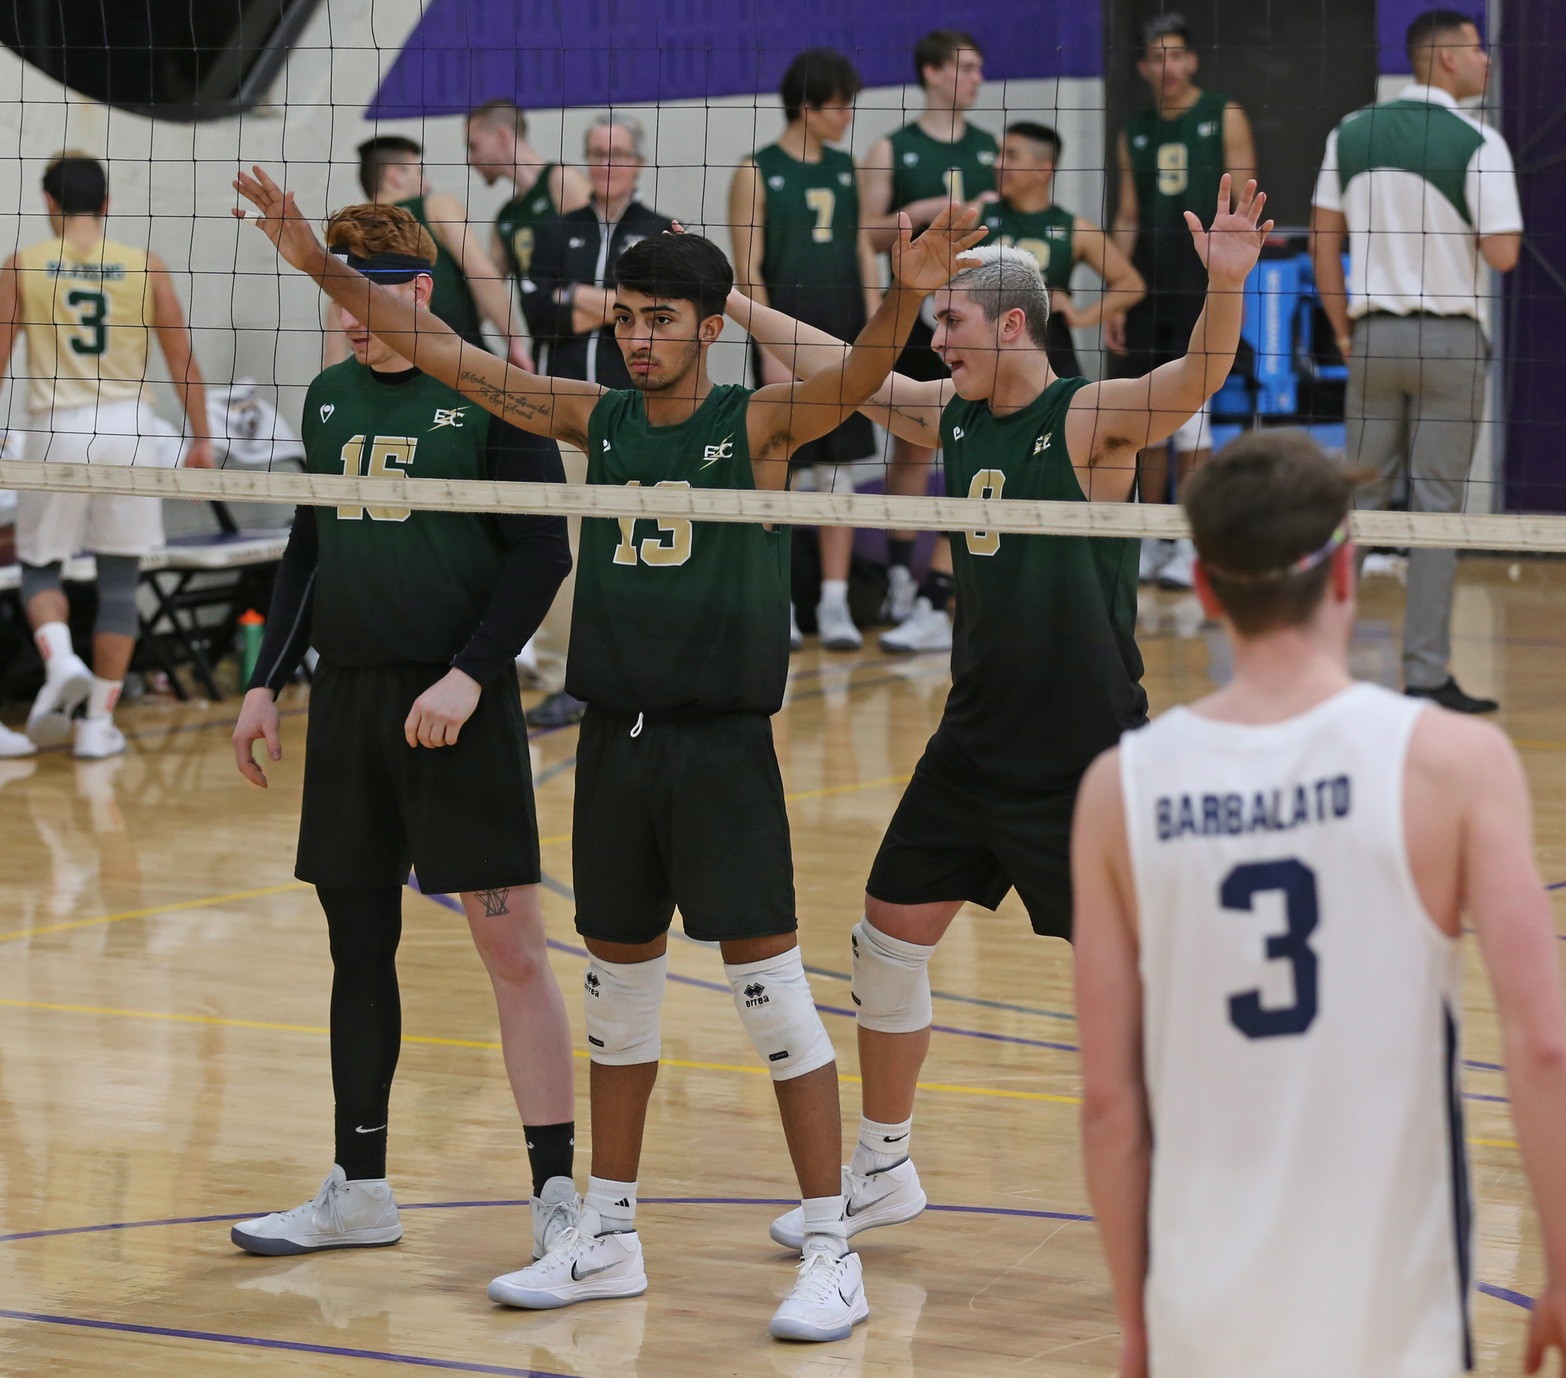 NO. 15 Men’s Volleyball Split Tri-Match With NO.10 Endicott College and Vassar College